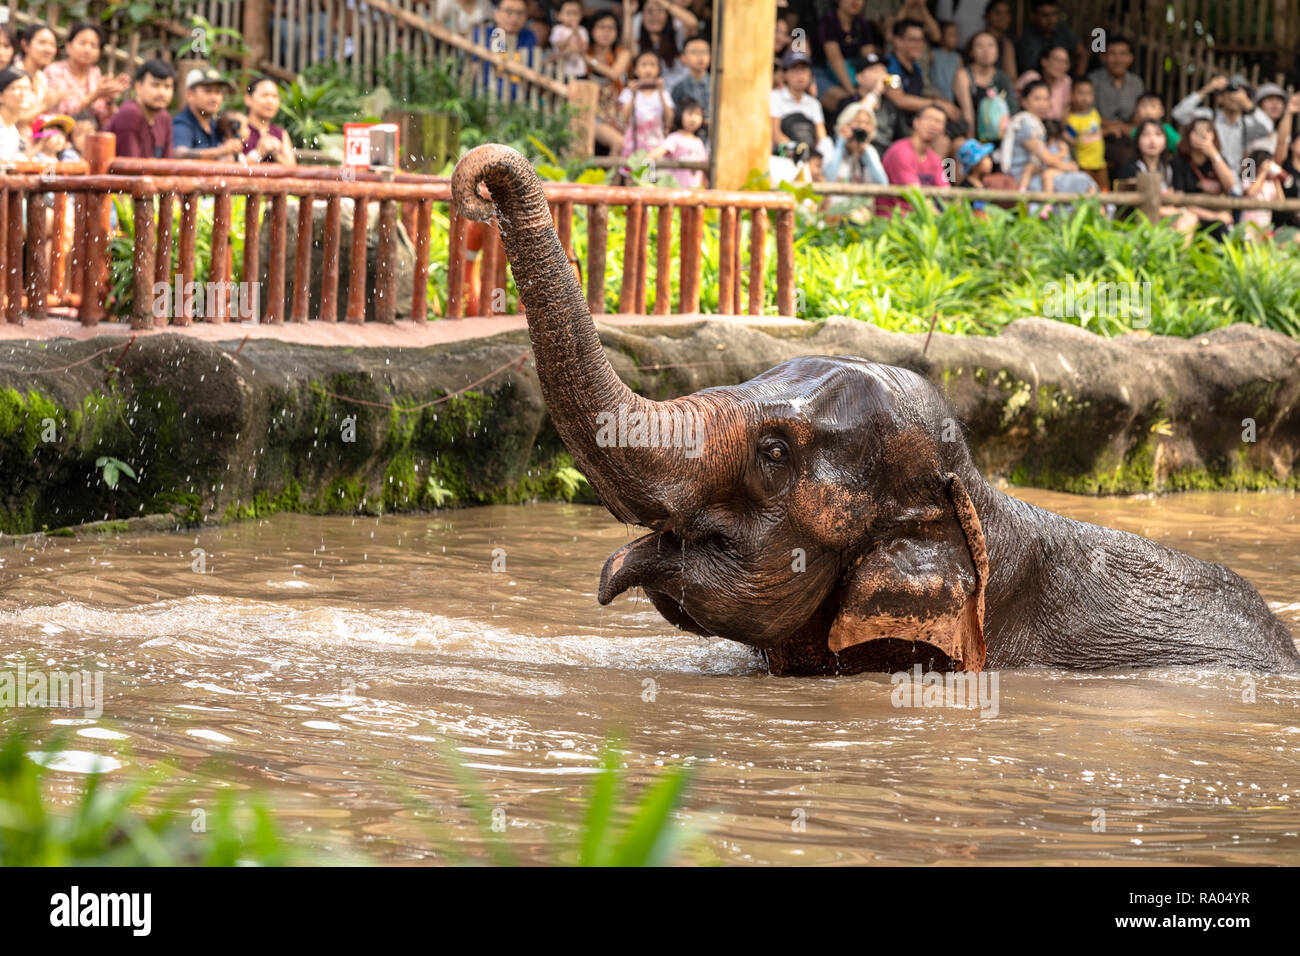 Singapore, December 2018: Asian elephant, Elephas maximus, entertaining in zoo. Stock Photo